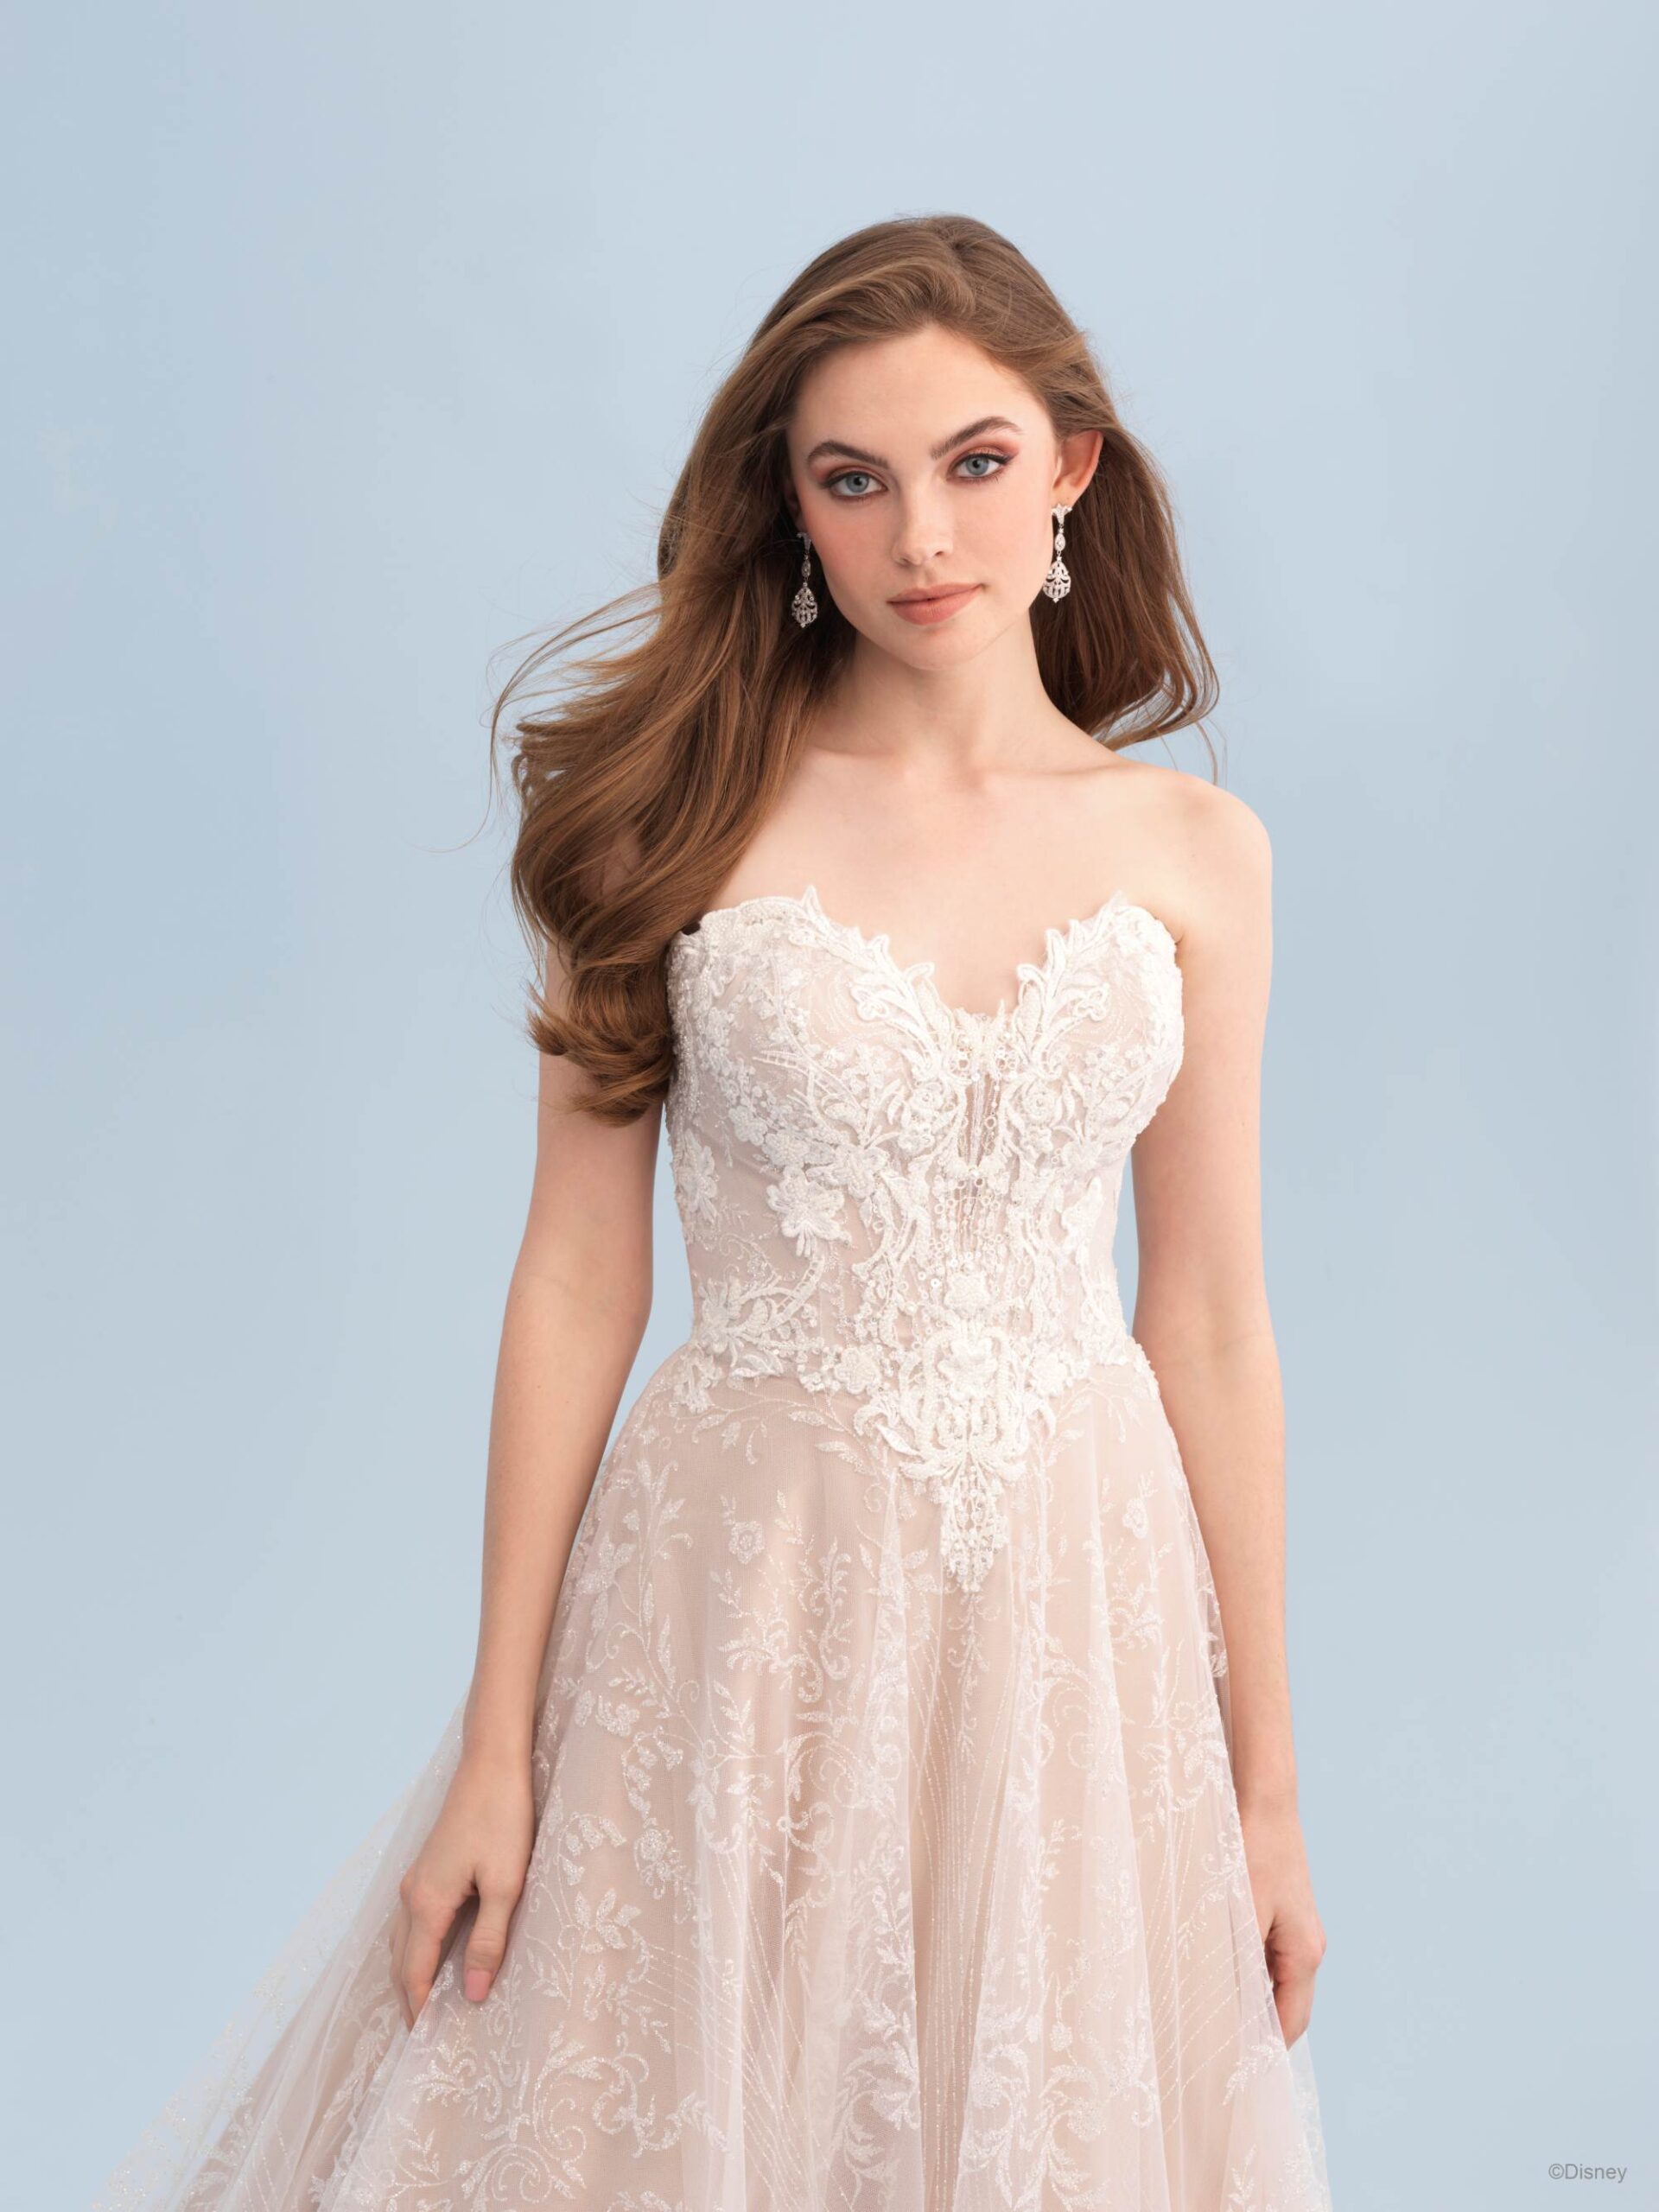 cinderella dress, cinderella wedding dress, strapless wedding dress, princess dress, princess bride